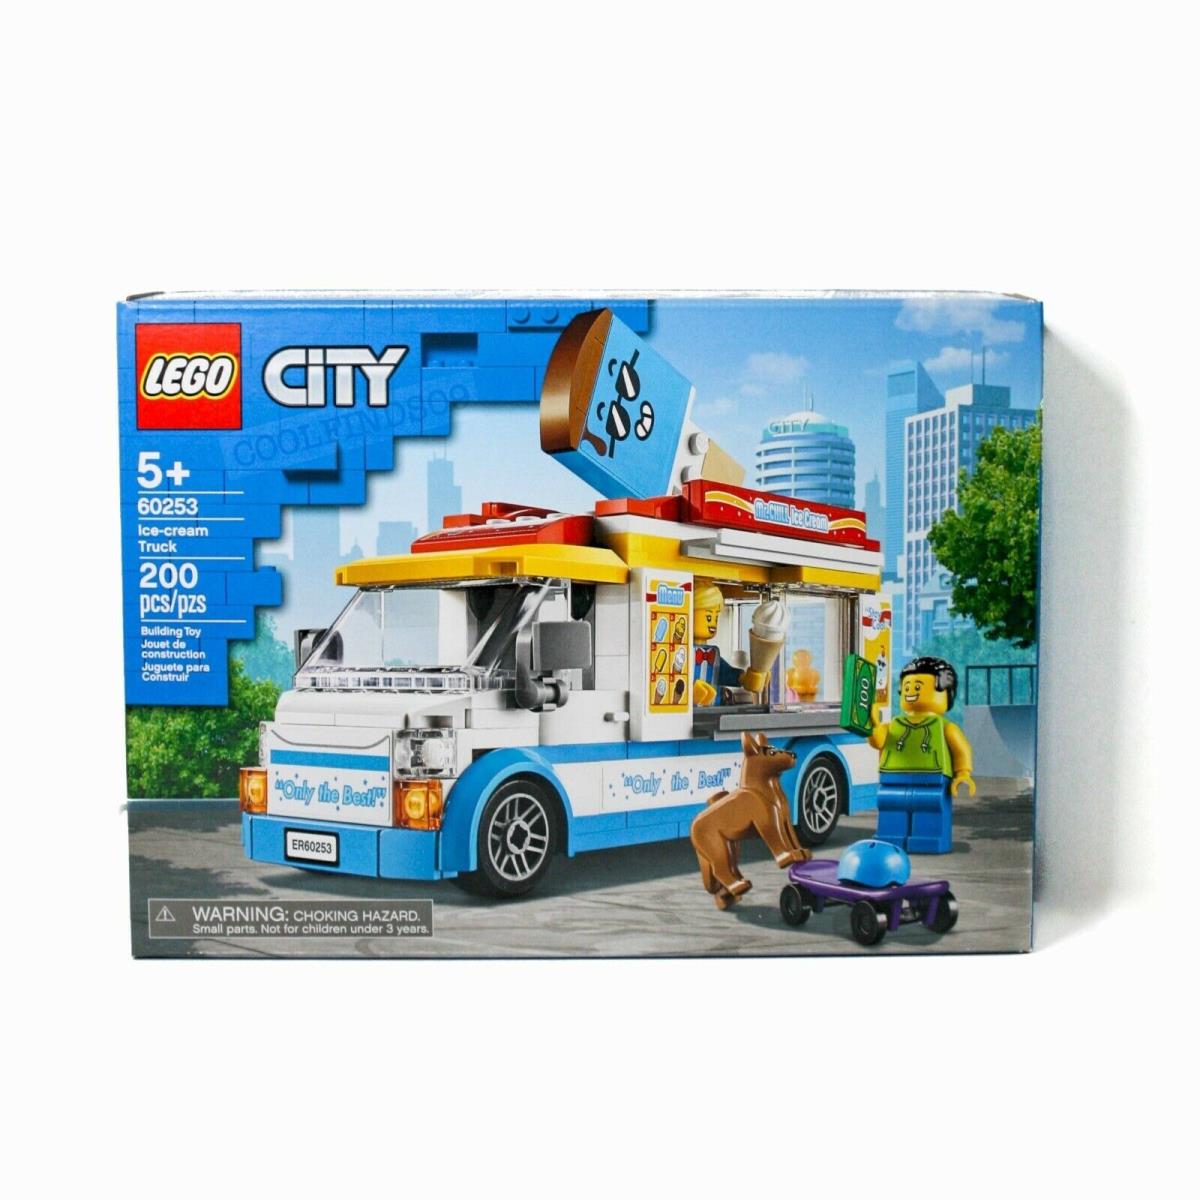 Lego City Great Vehicles Ice Cream Truck Set 60253 Skateboard Dog Ice Cream Man